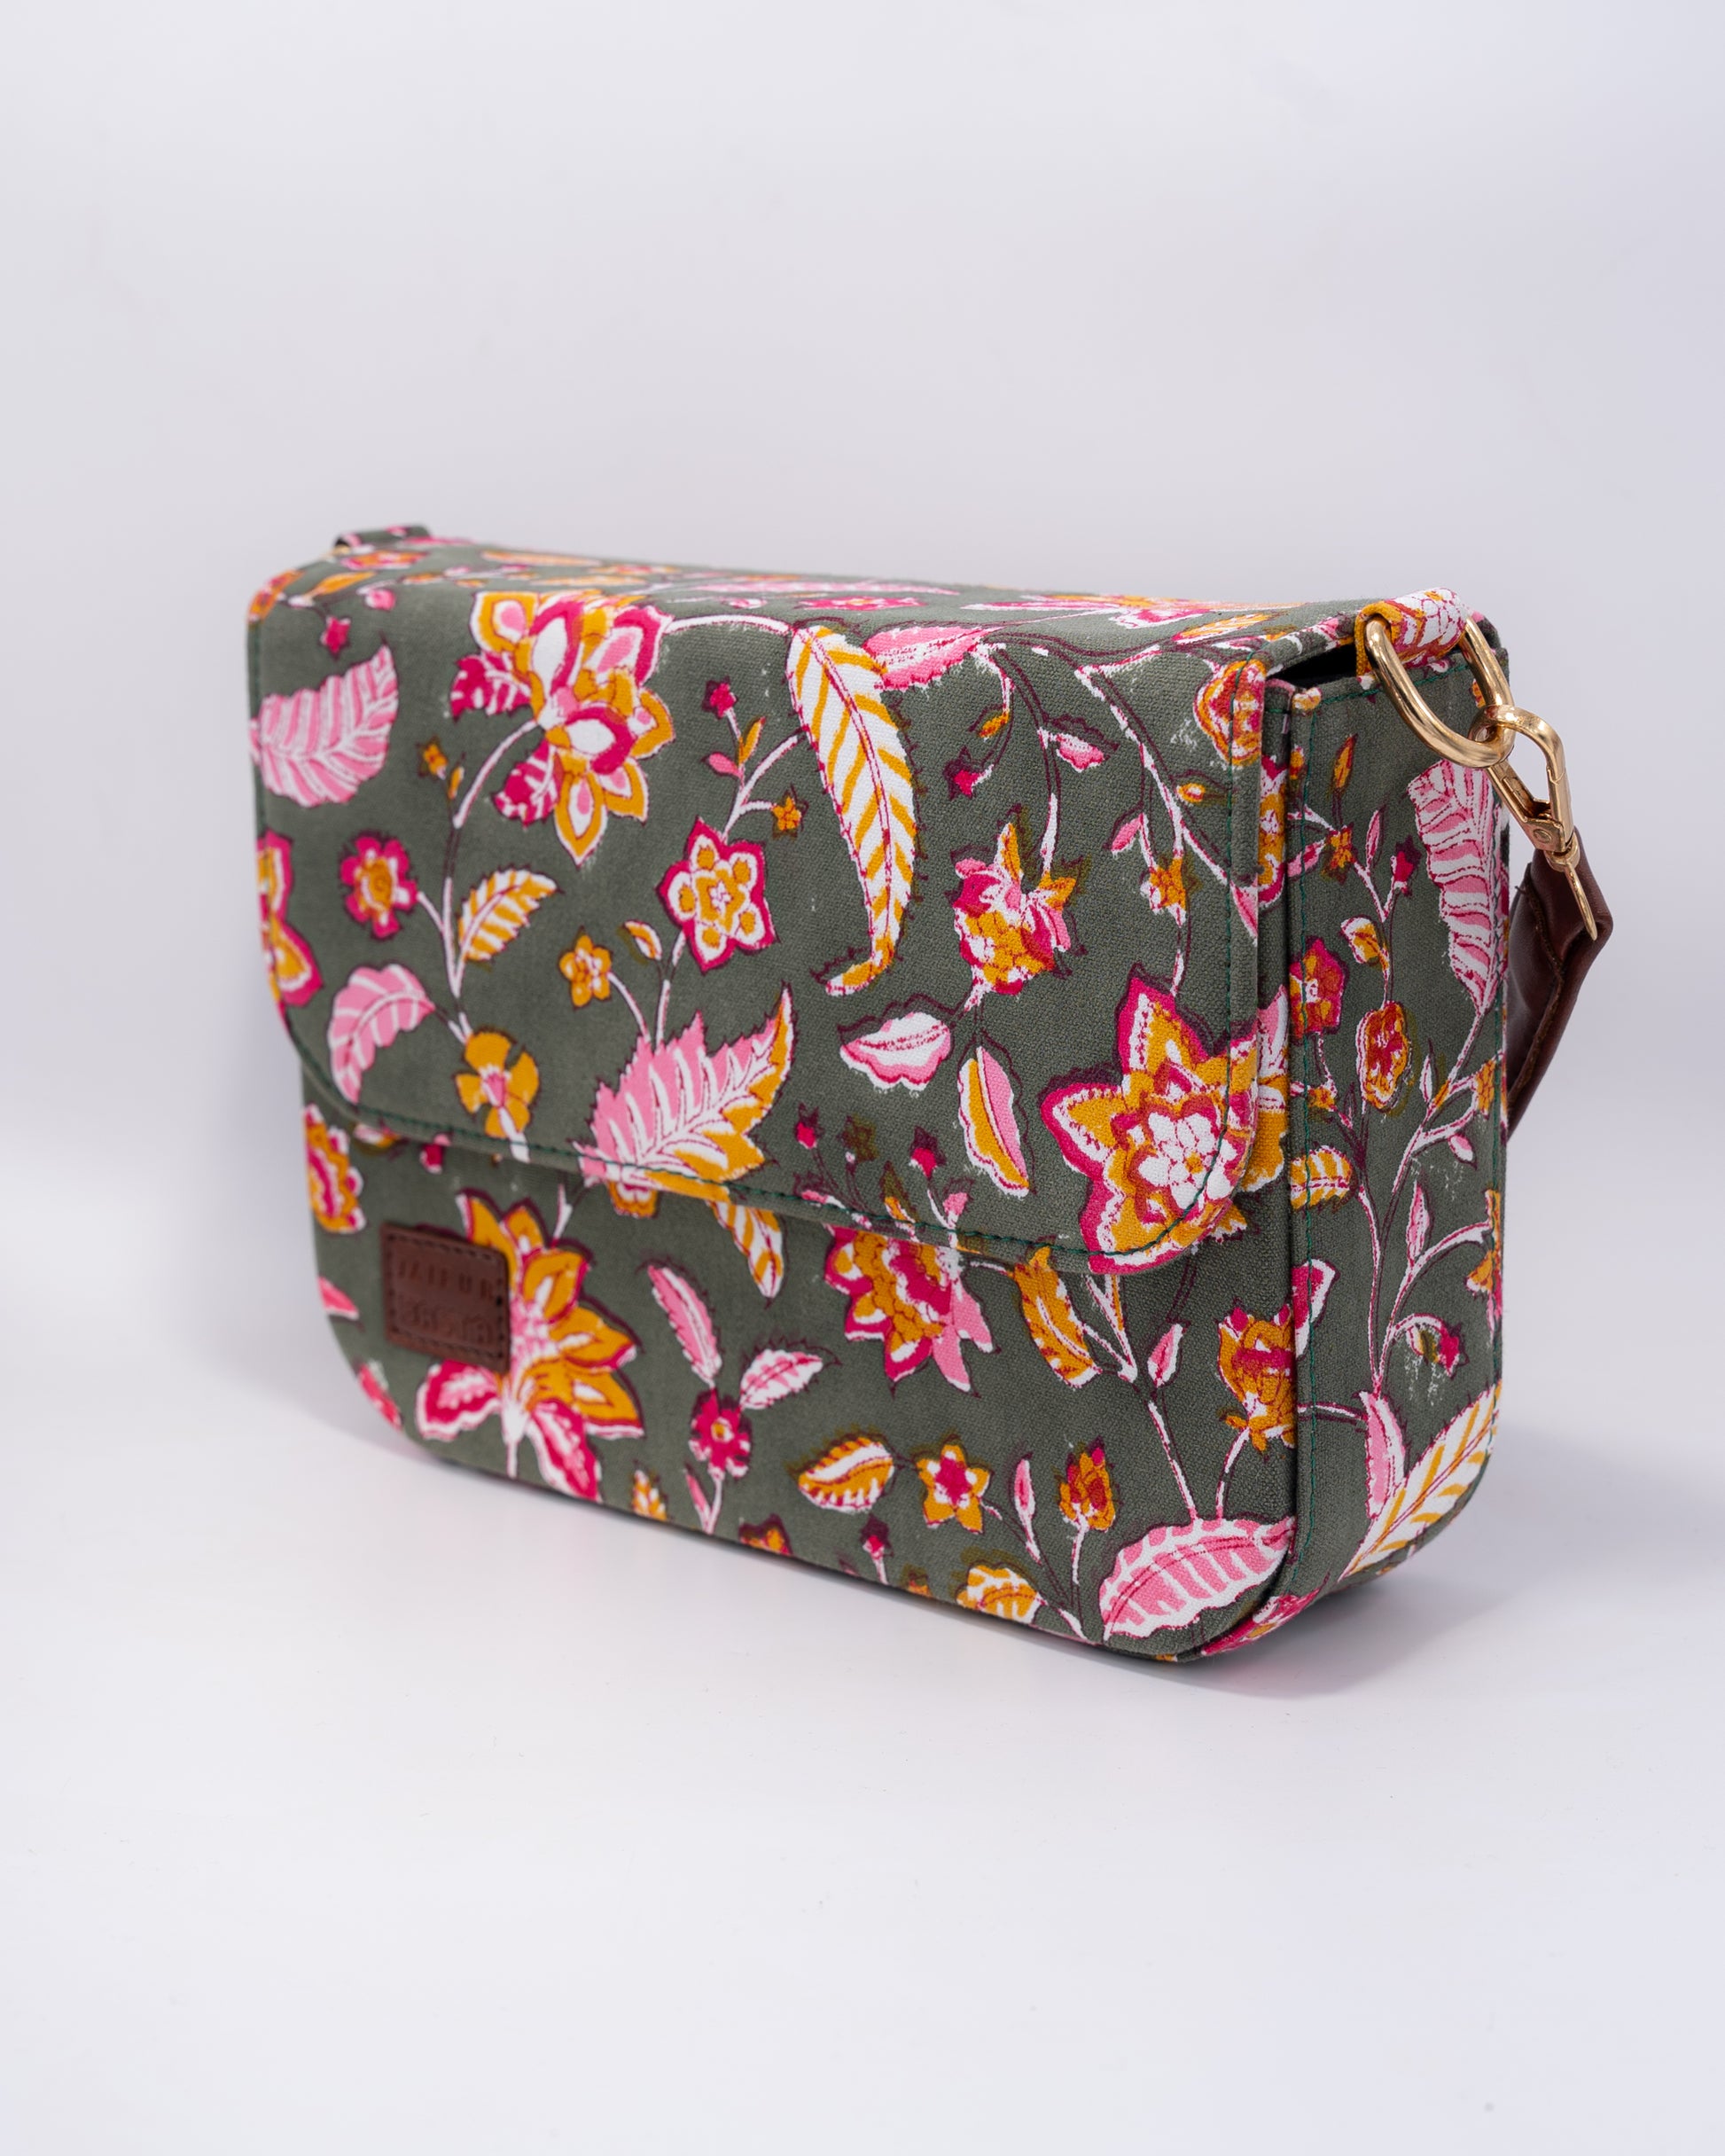 Floral Handicraft-Palace Cotton Block Printed Yoga Bag/Mat at Rs 400/piece  in Jaipur